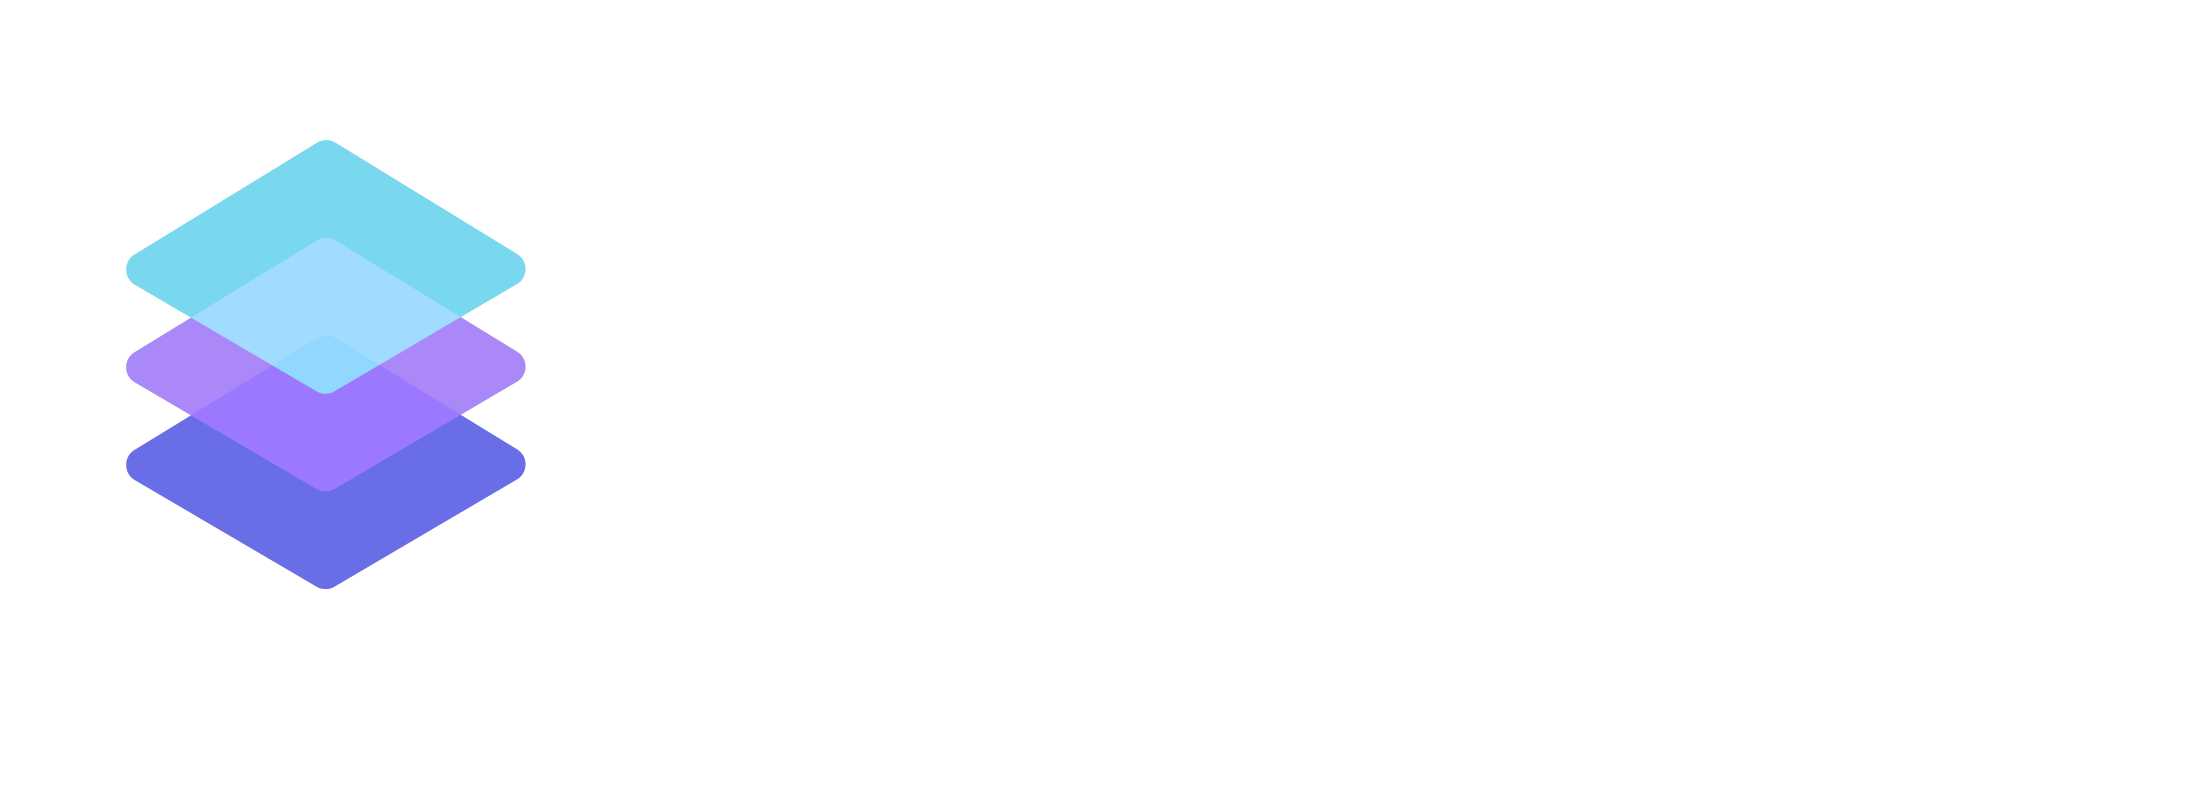 Bigbrain